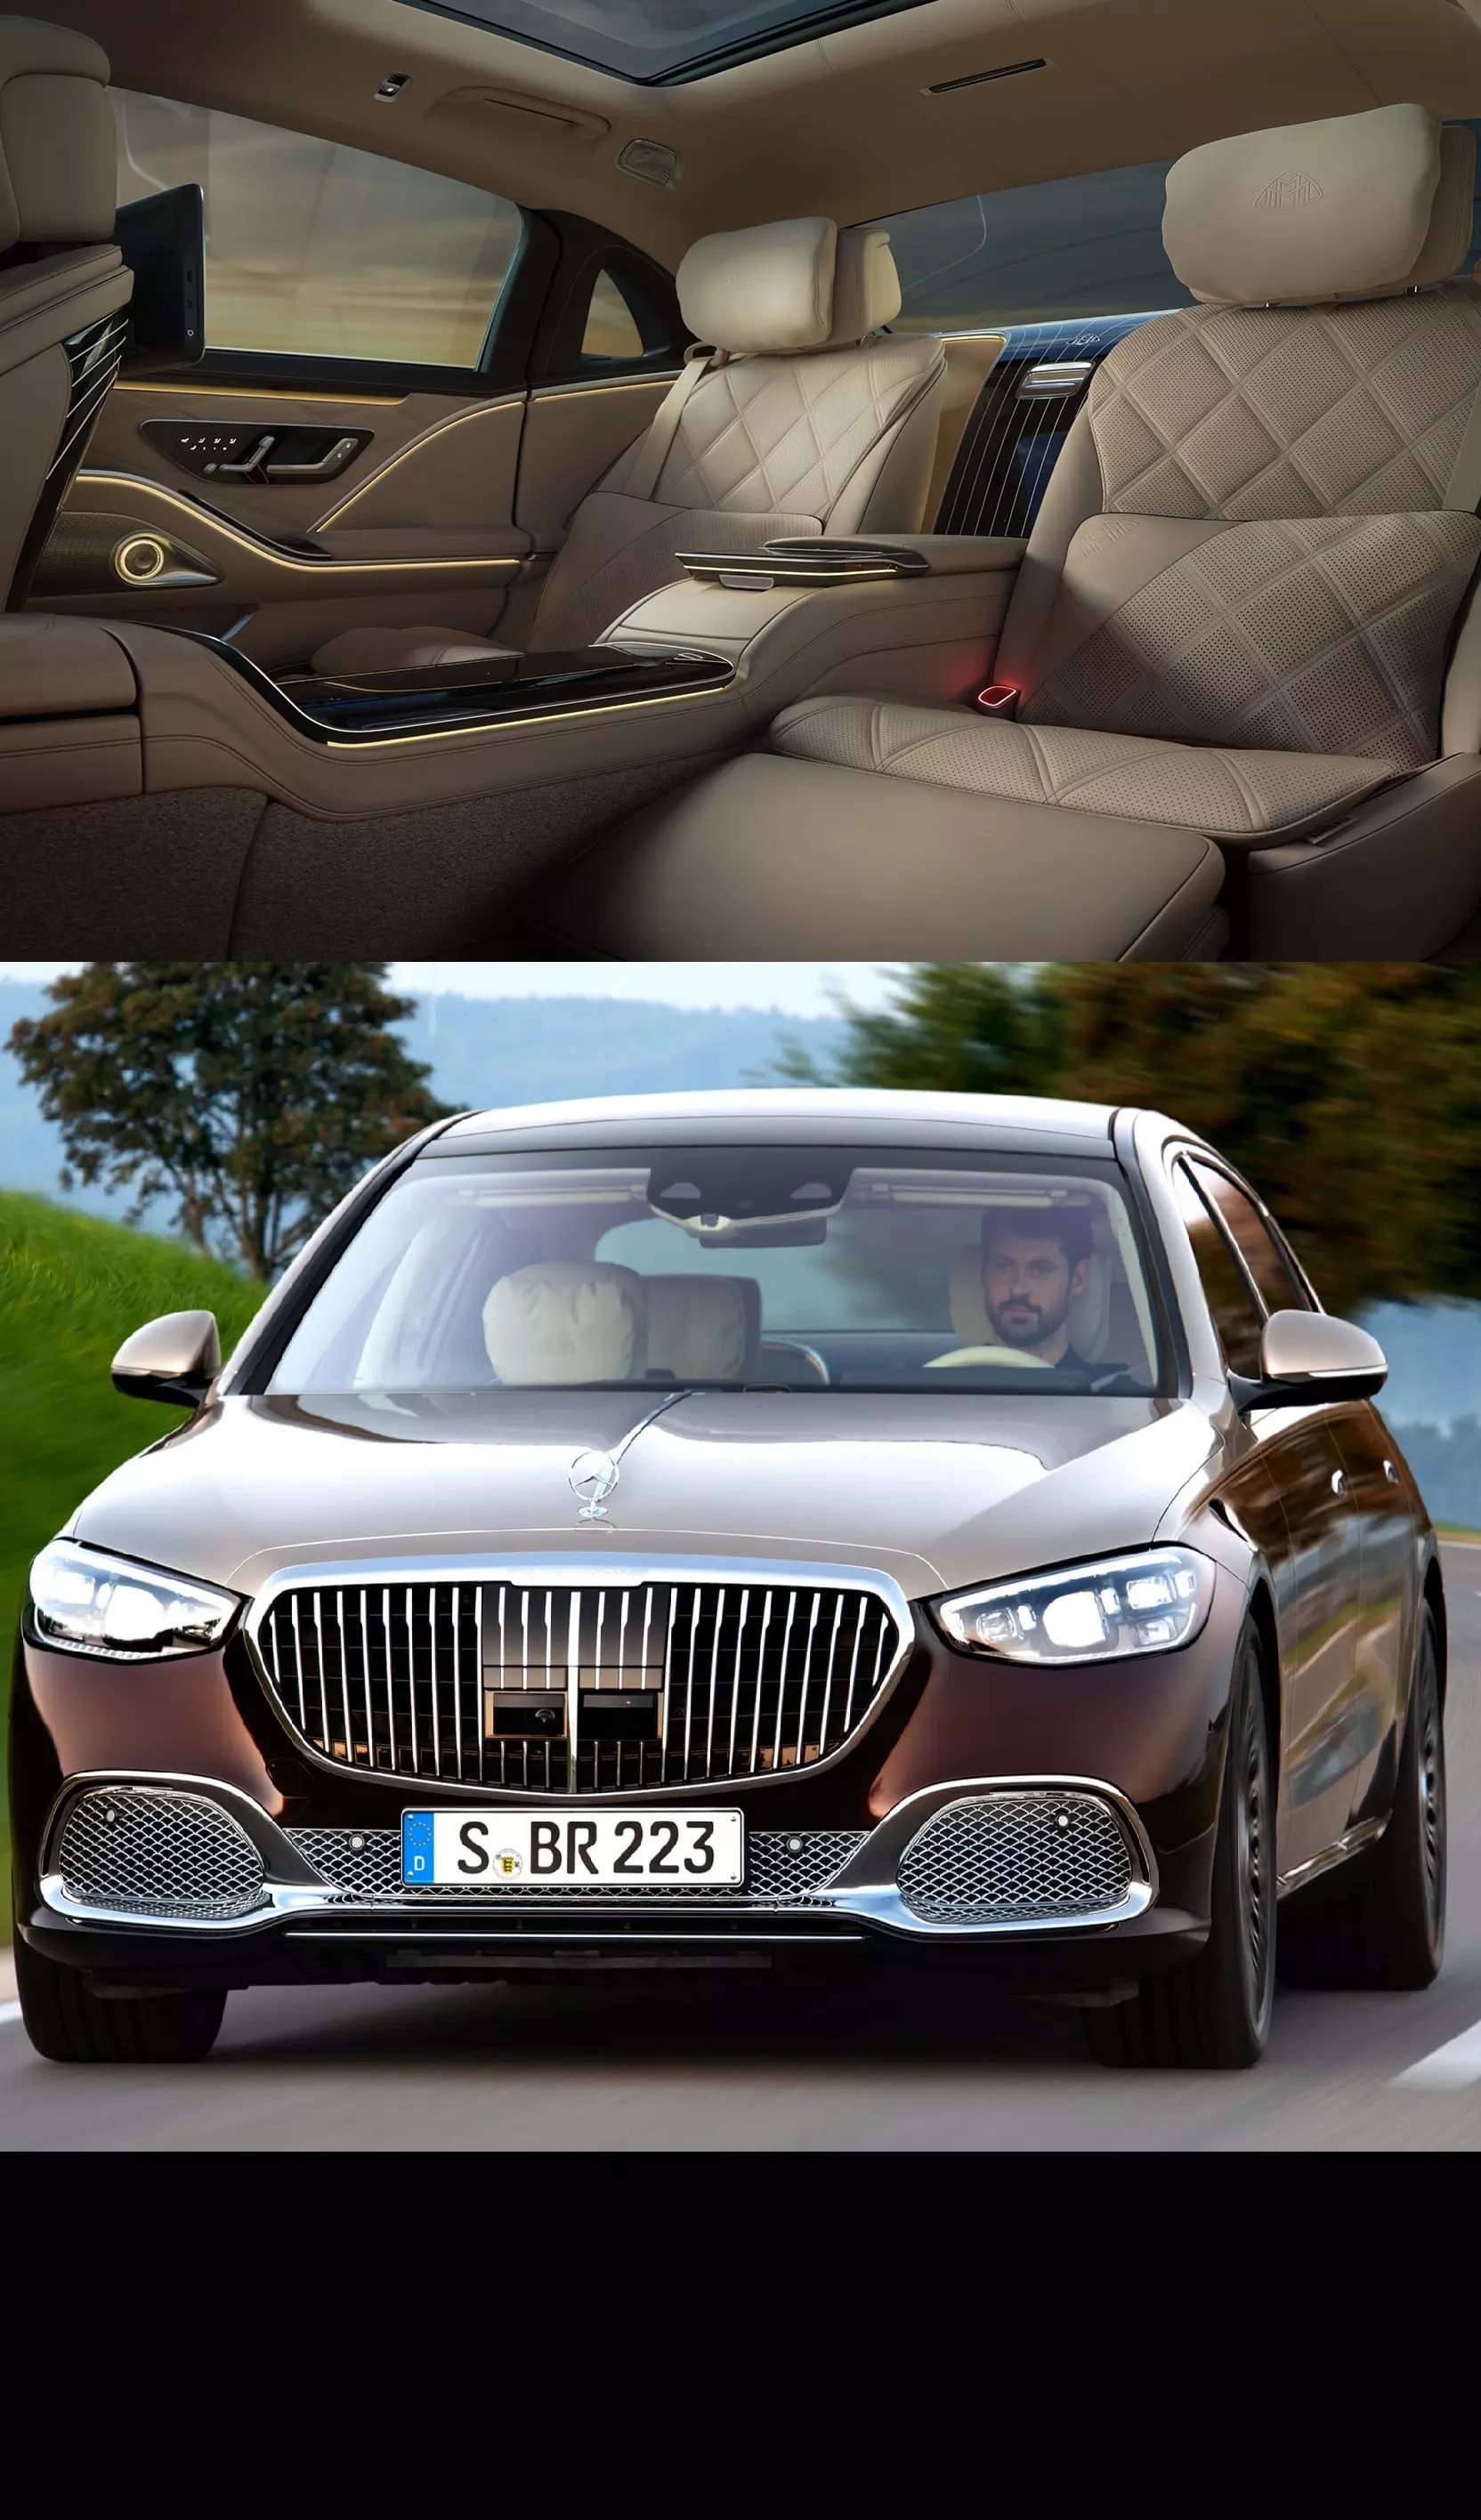 BMW 7 Series vs RollsRoyce Phantom Comparison Which Car is Better 